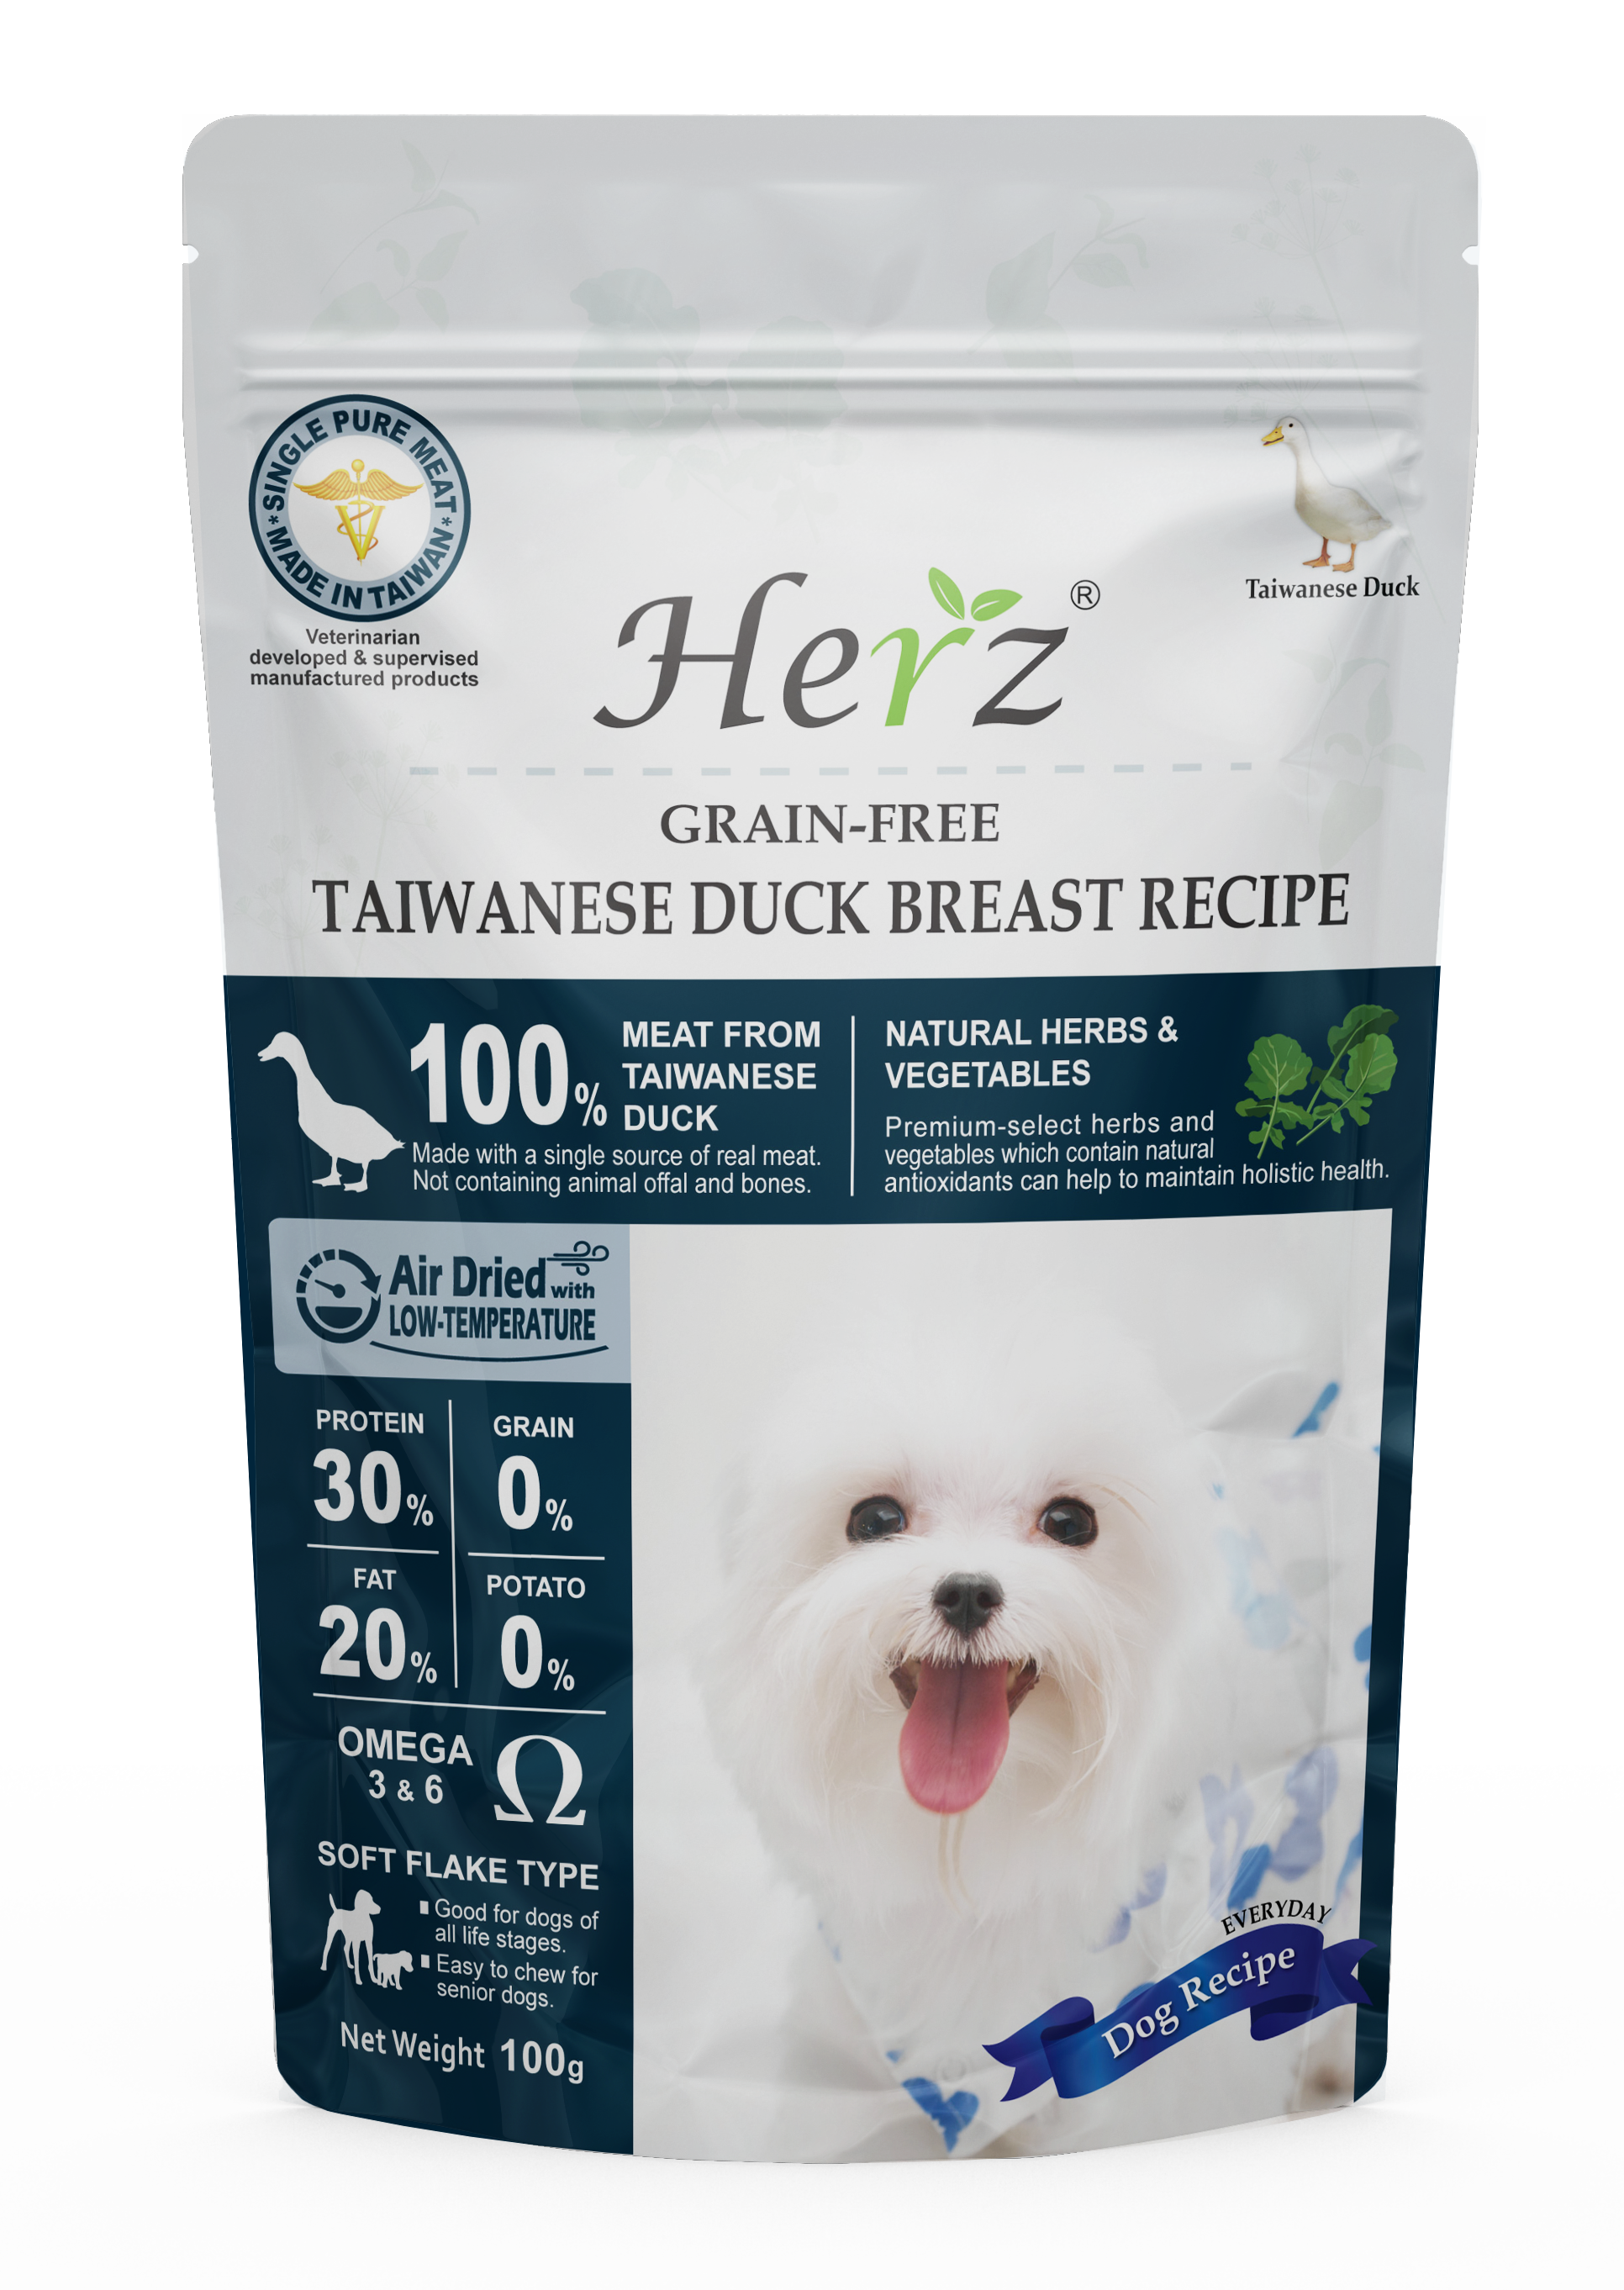 Herz Grain Free Taiwanese Duck Breast Recipe (100g)